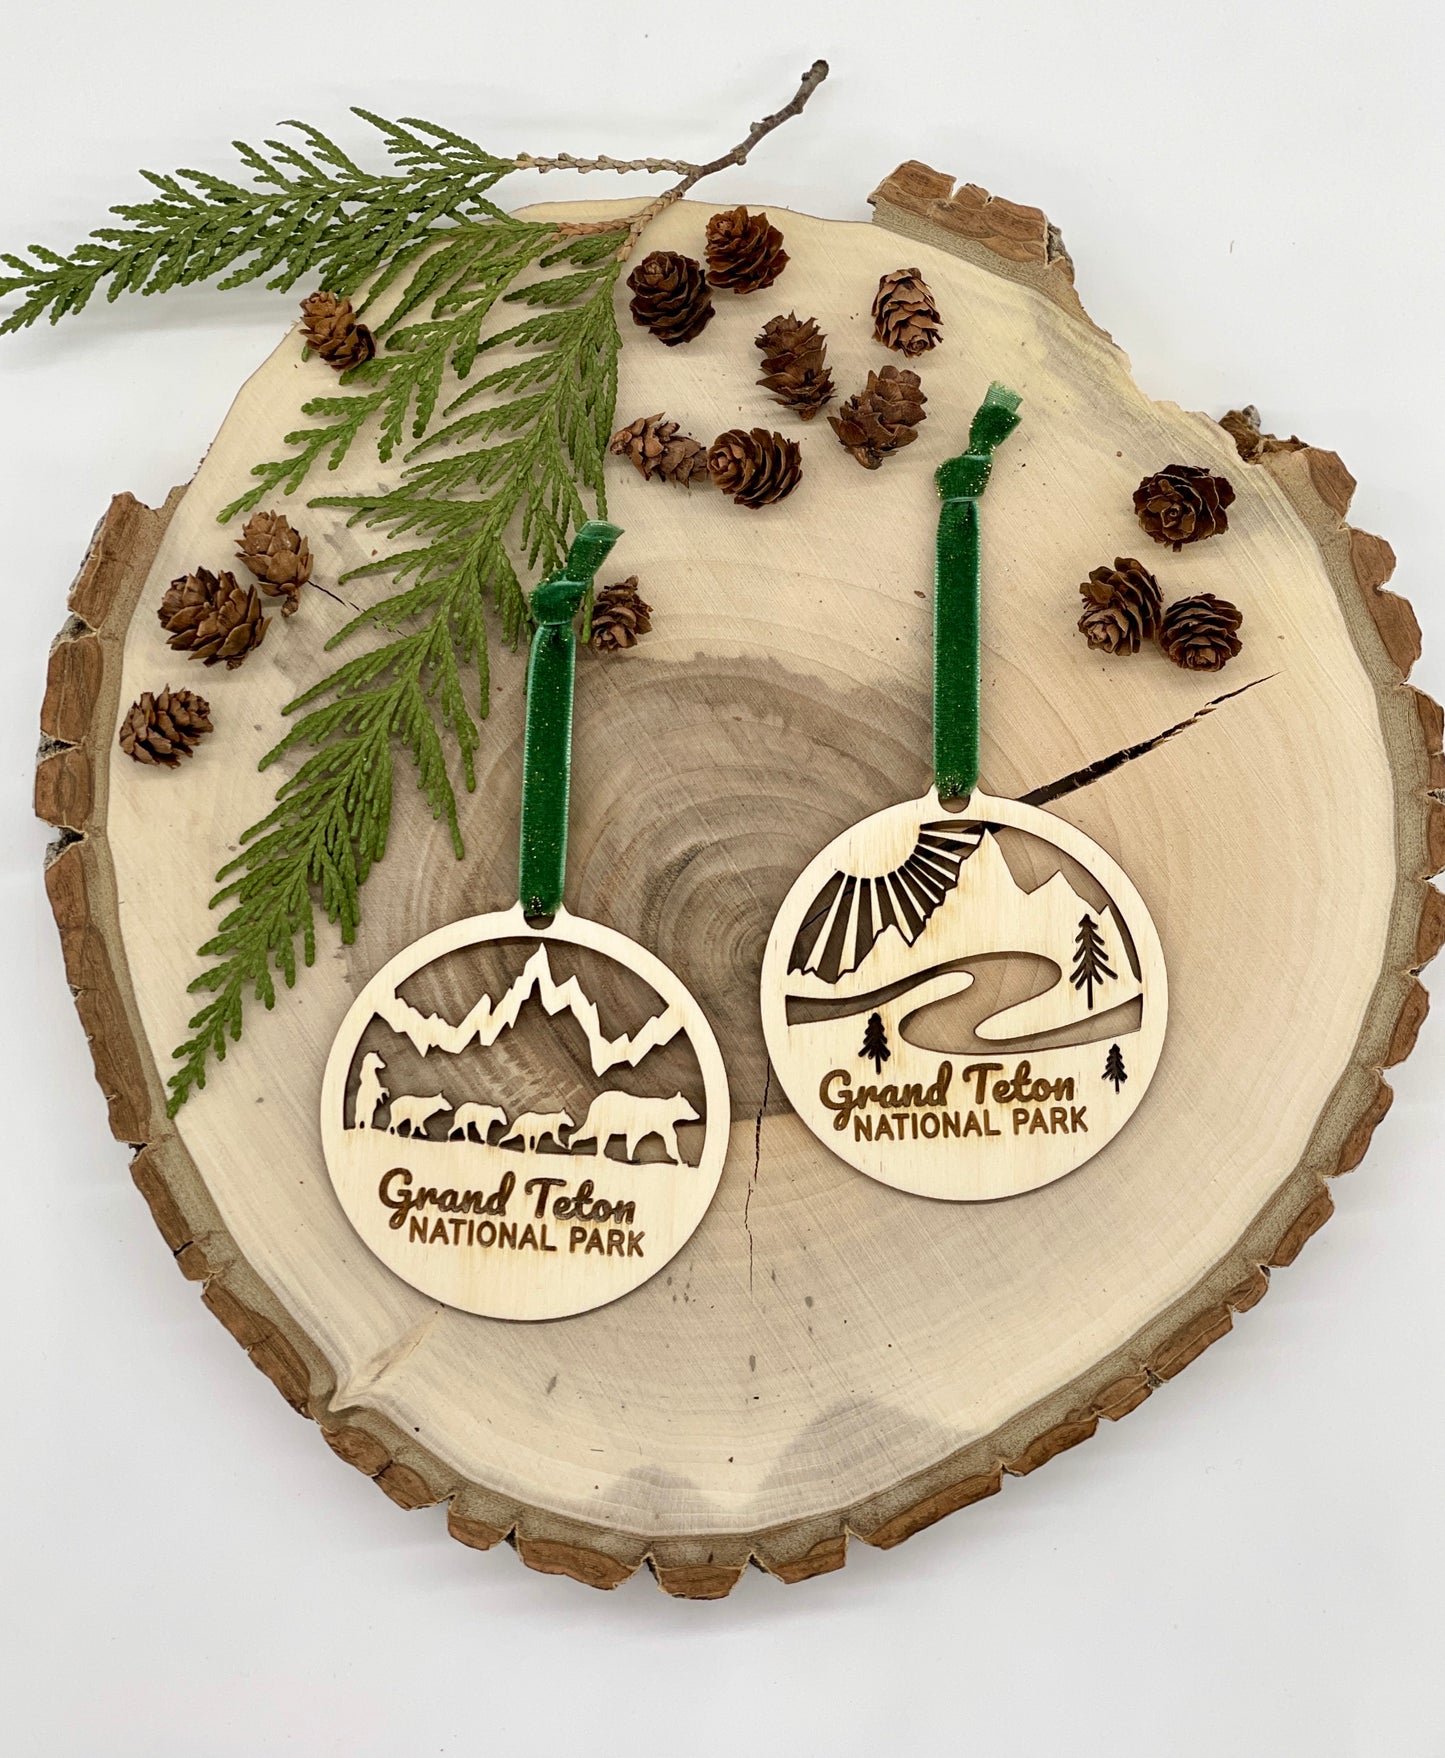 Grand Teton National Park Christmas ornament